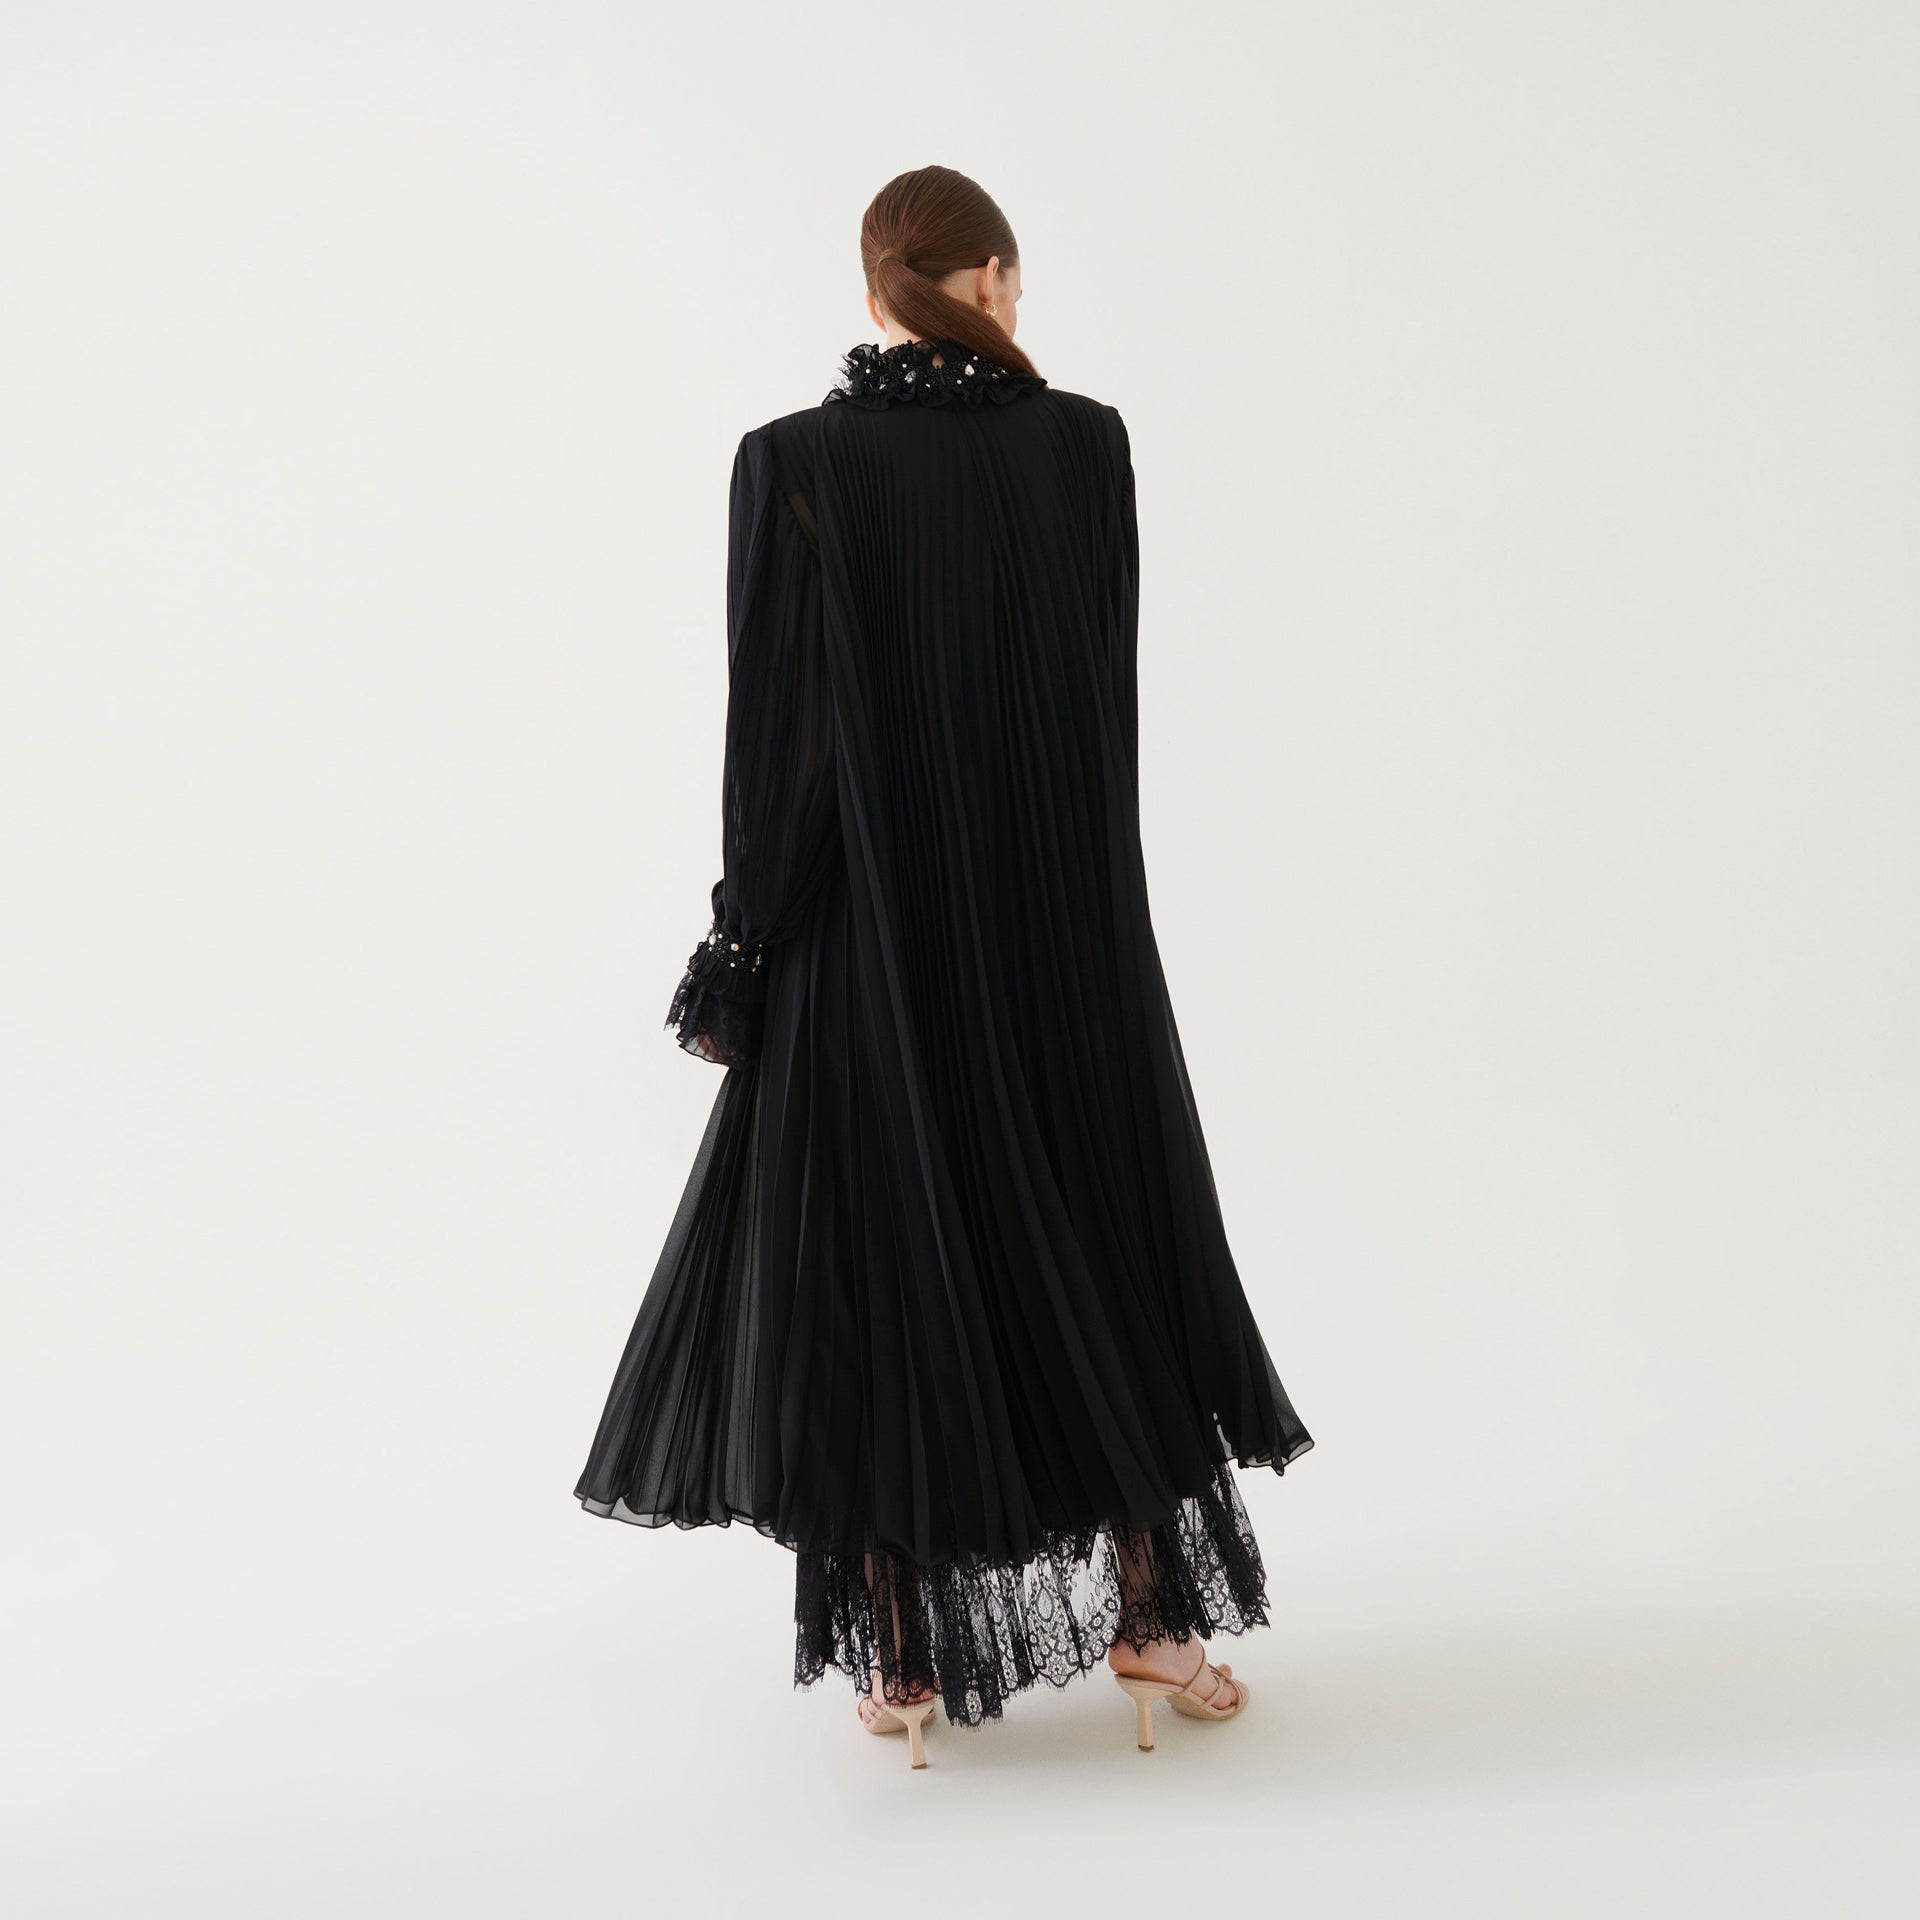 Black Chiffon Pleated Dress From Miha